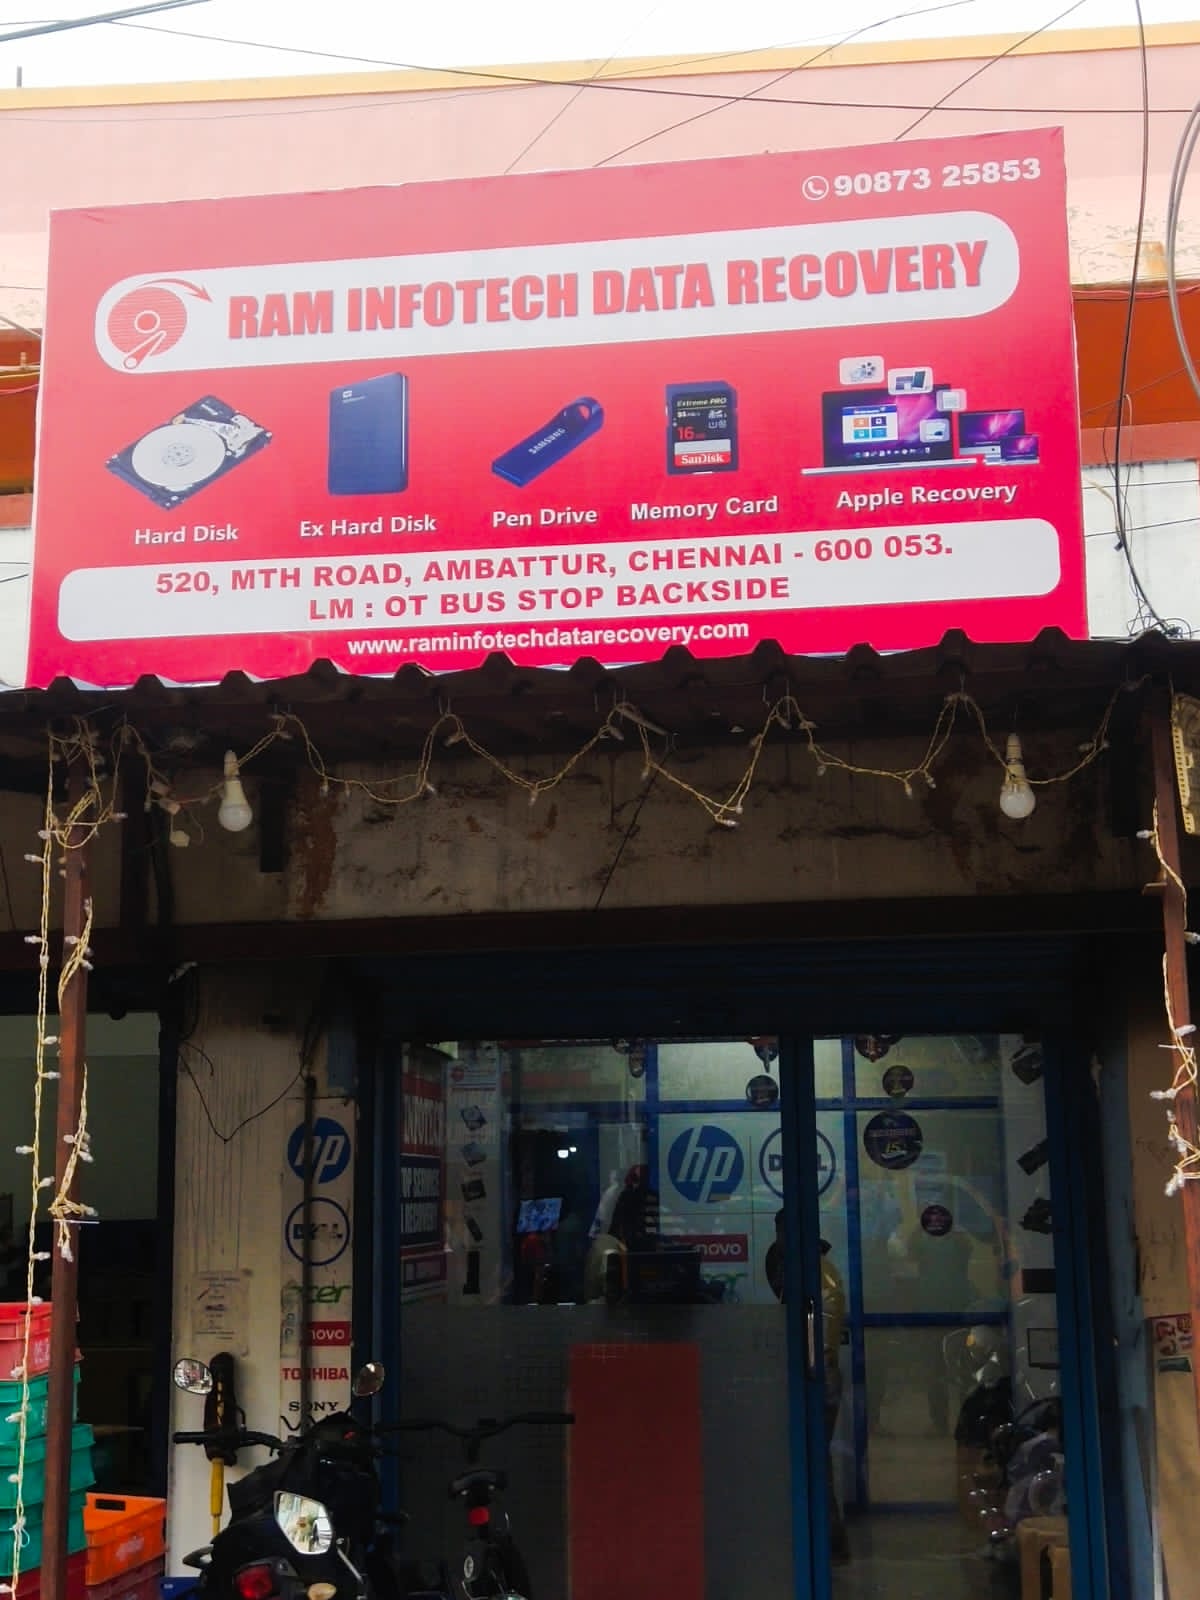 Raminfotech Data Recovery in ambattur in Chennai